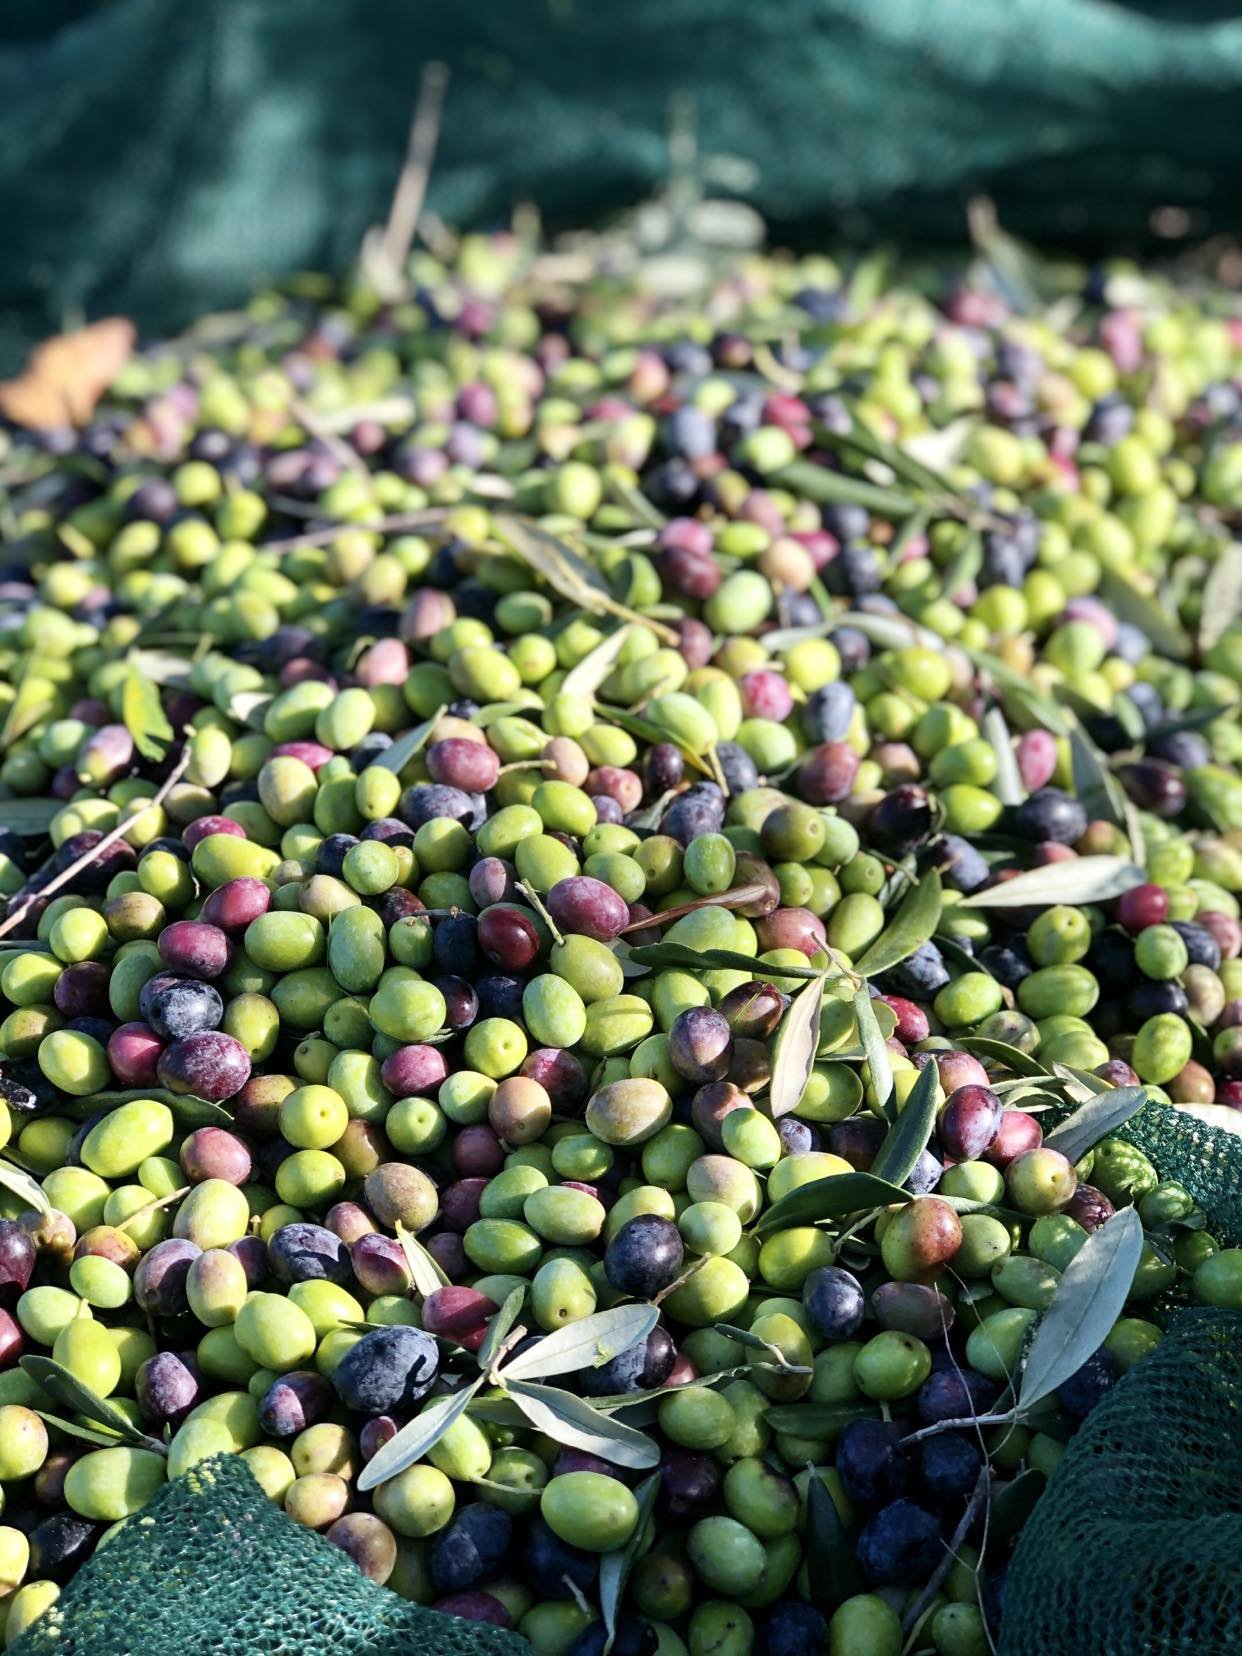 olives picked during harvest.jpg